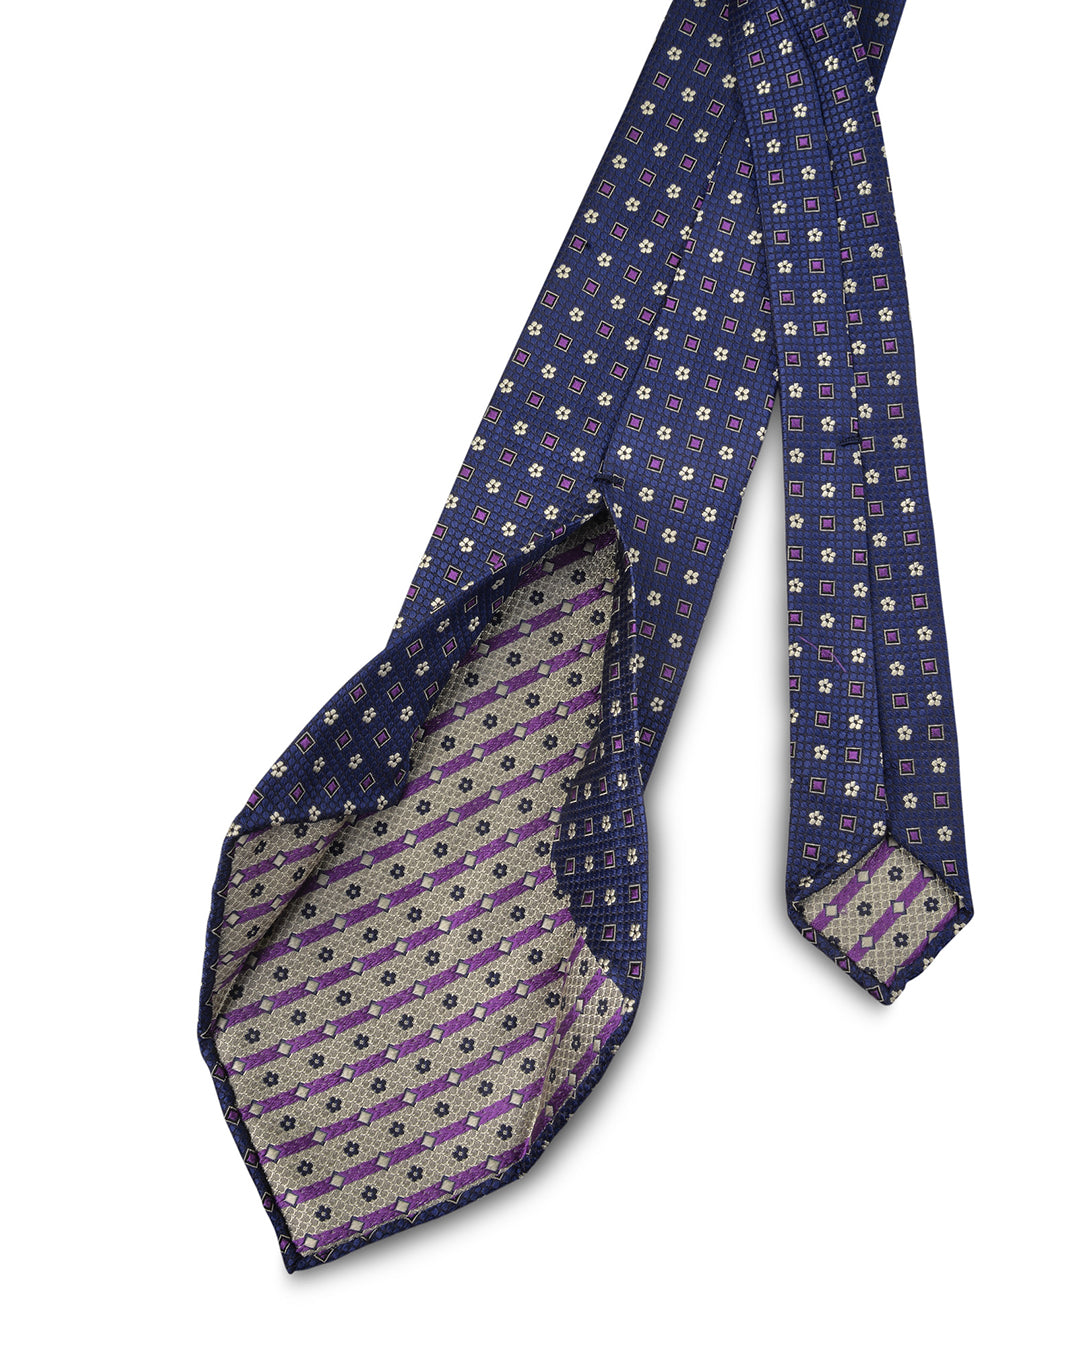 Alternate Square Floral Purple Tie